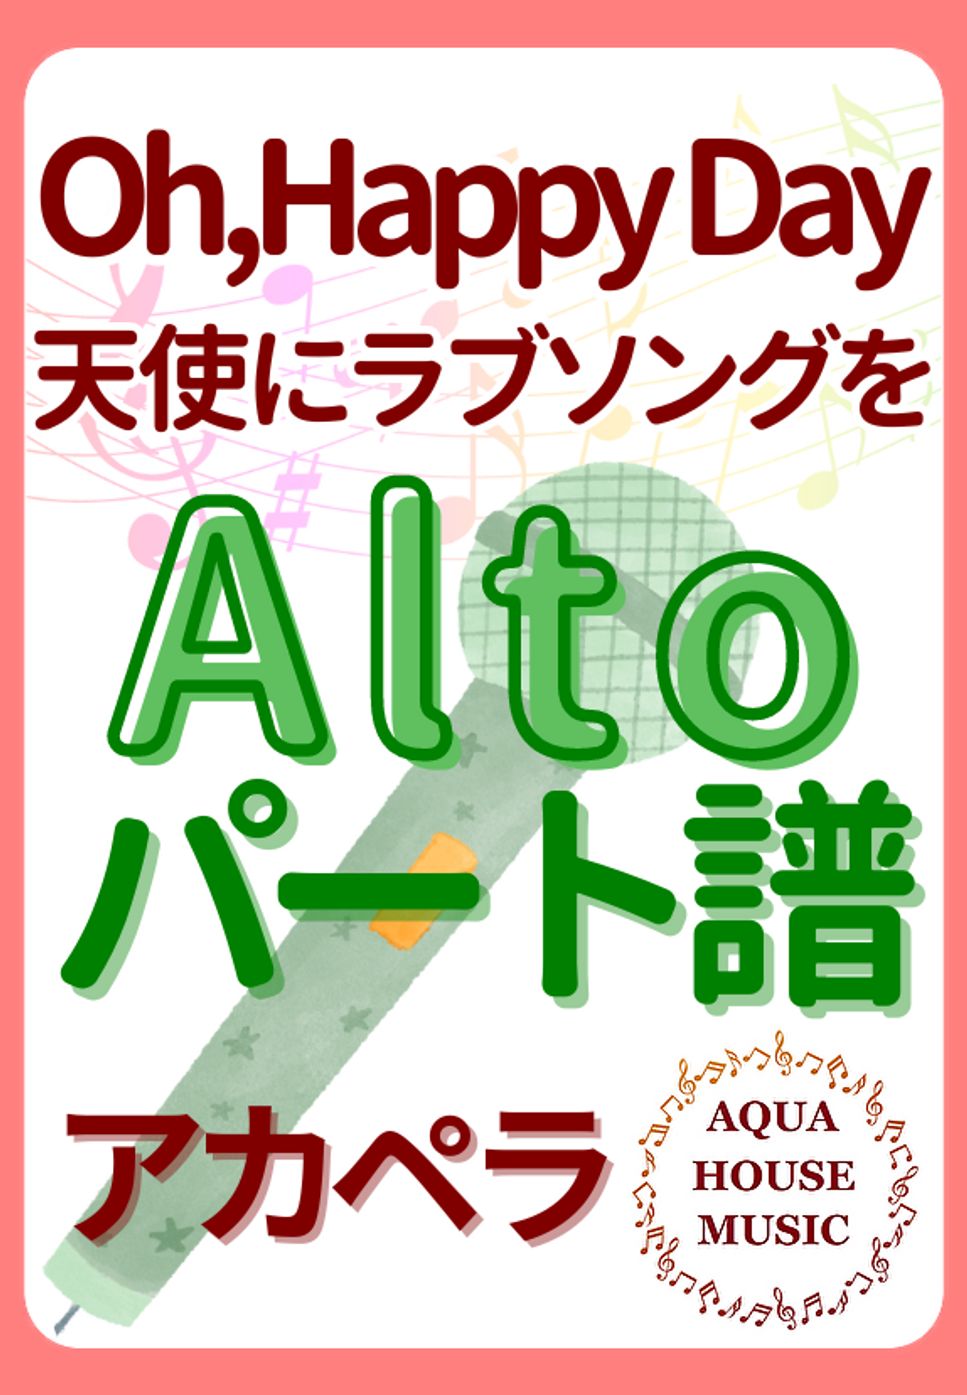 Oh, Happy Day (アカペラ楽譜♪Altoパート譜) by 飯田 亜紗子